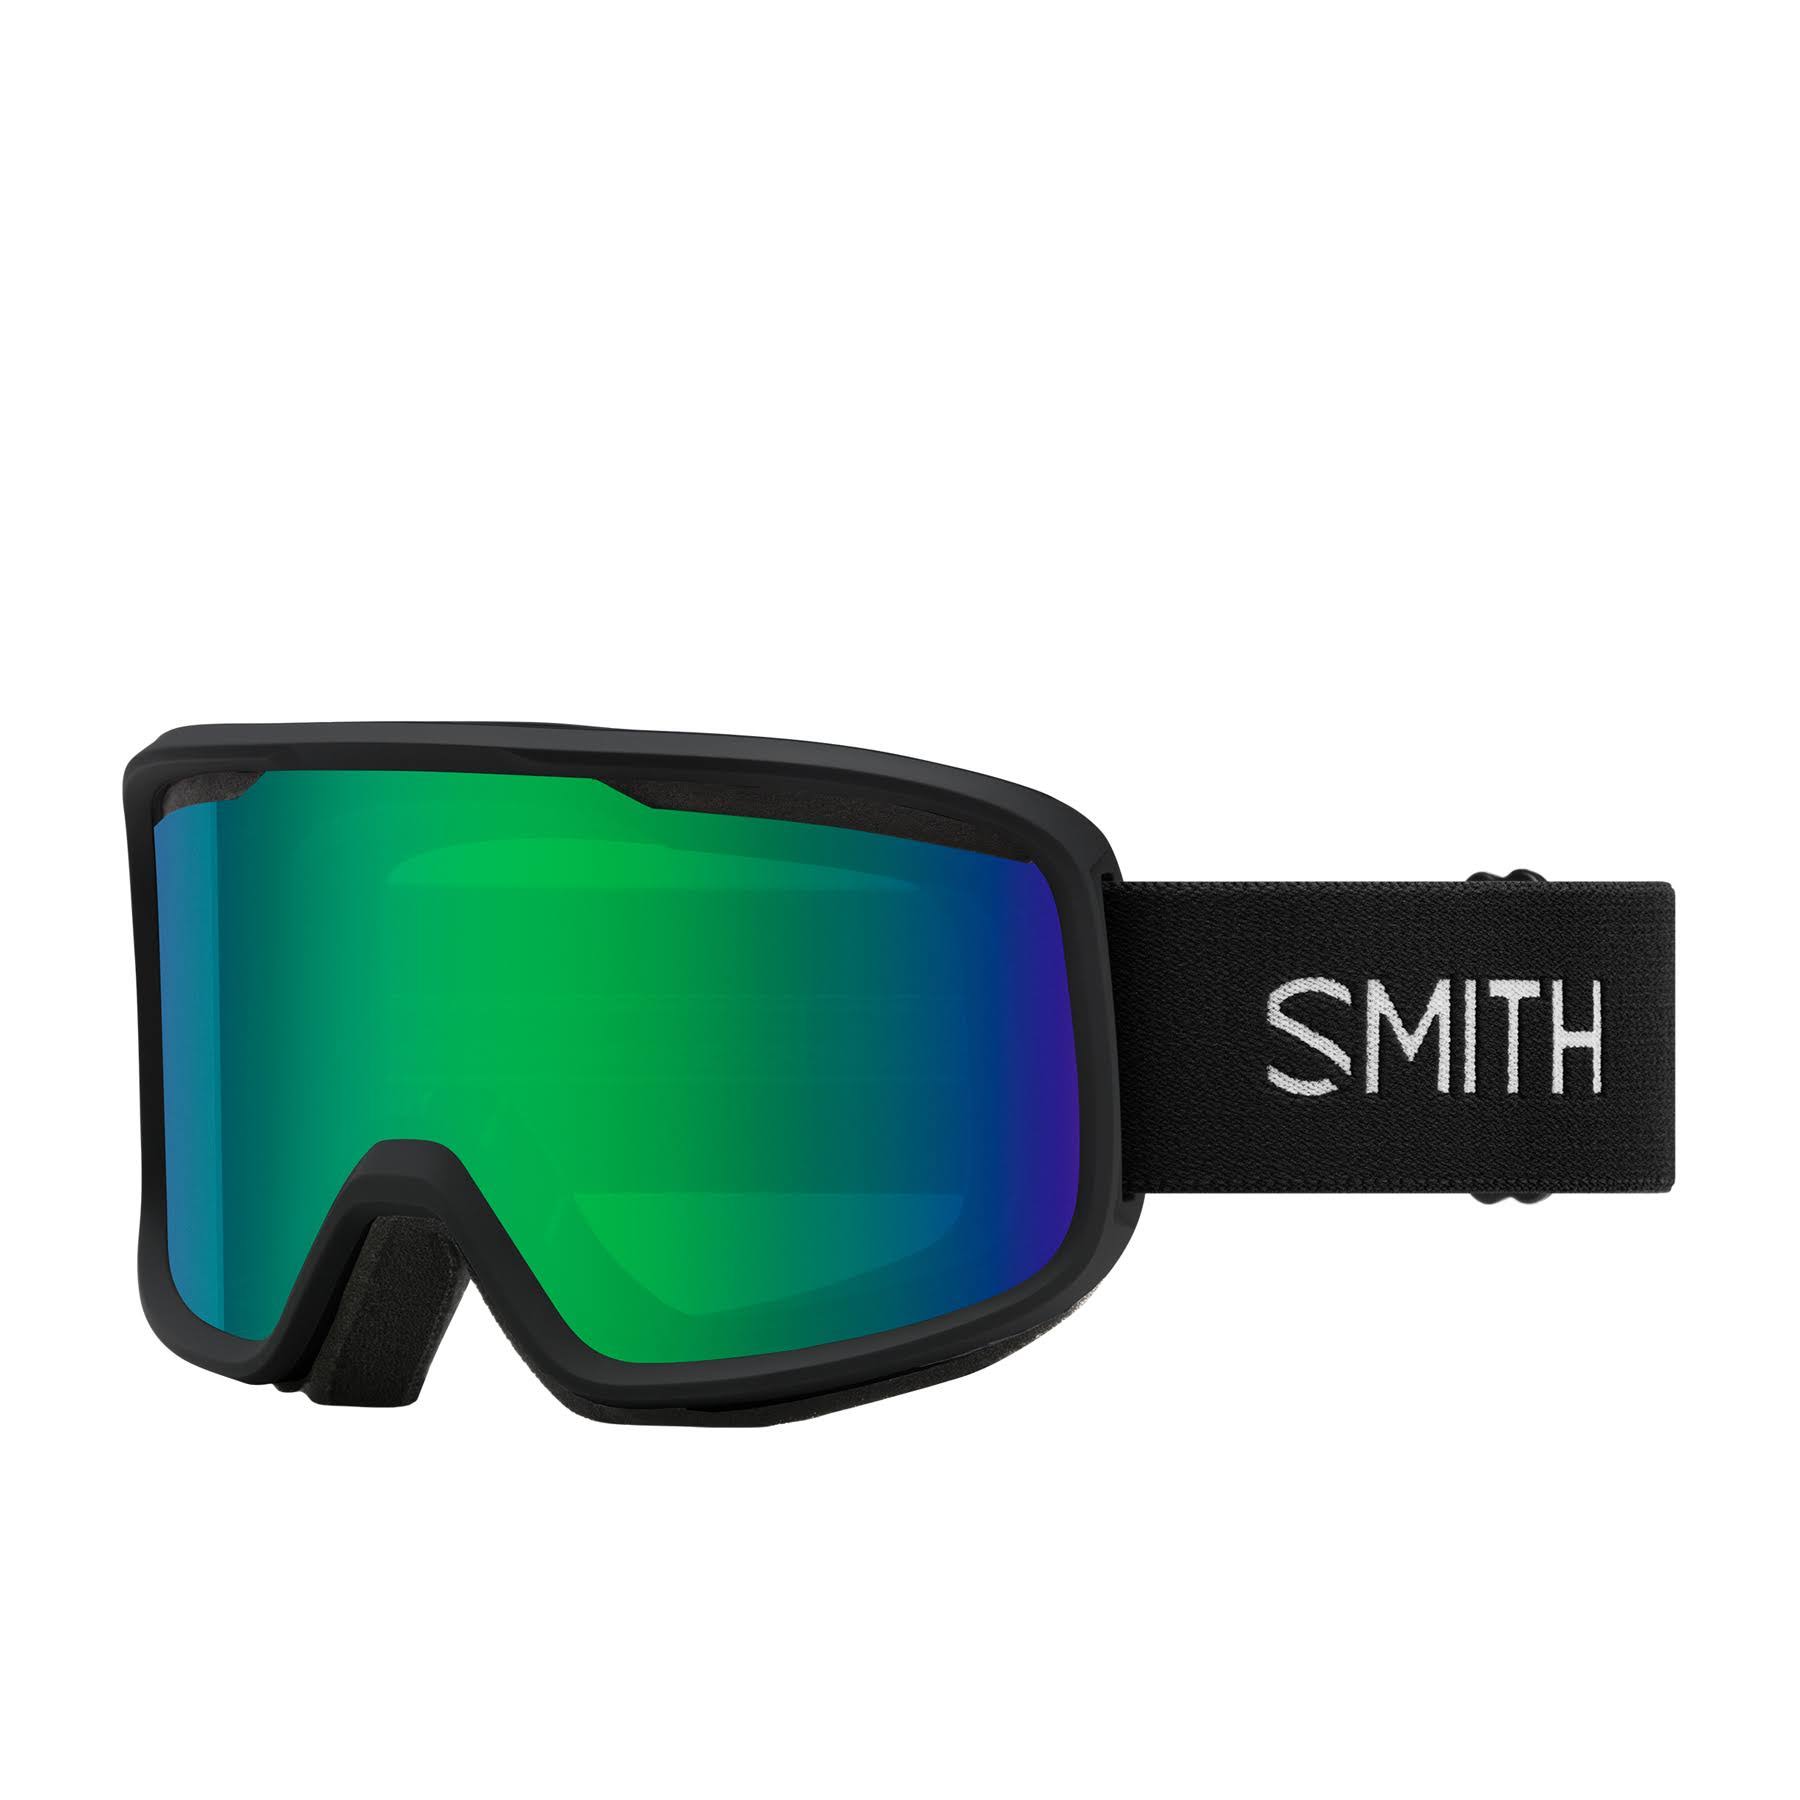 Smith Frontier Snow Goggles - Black Green Sol-X Mirror